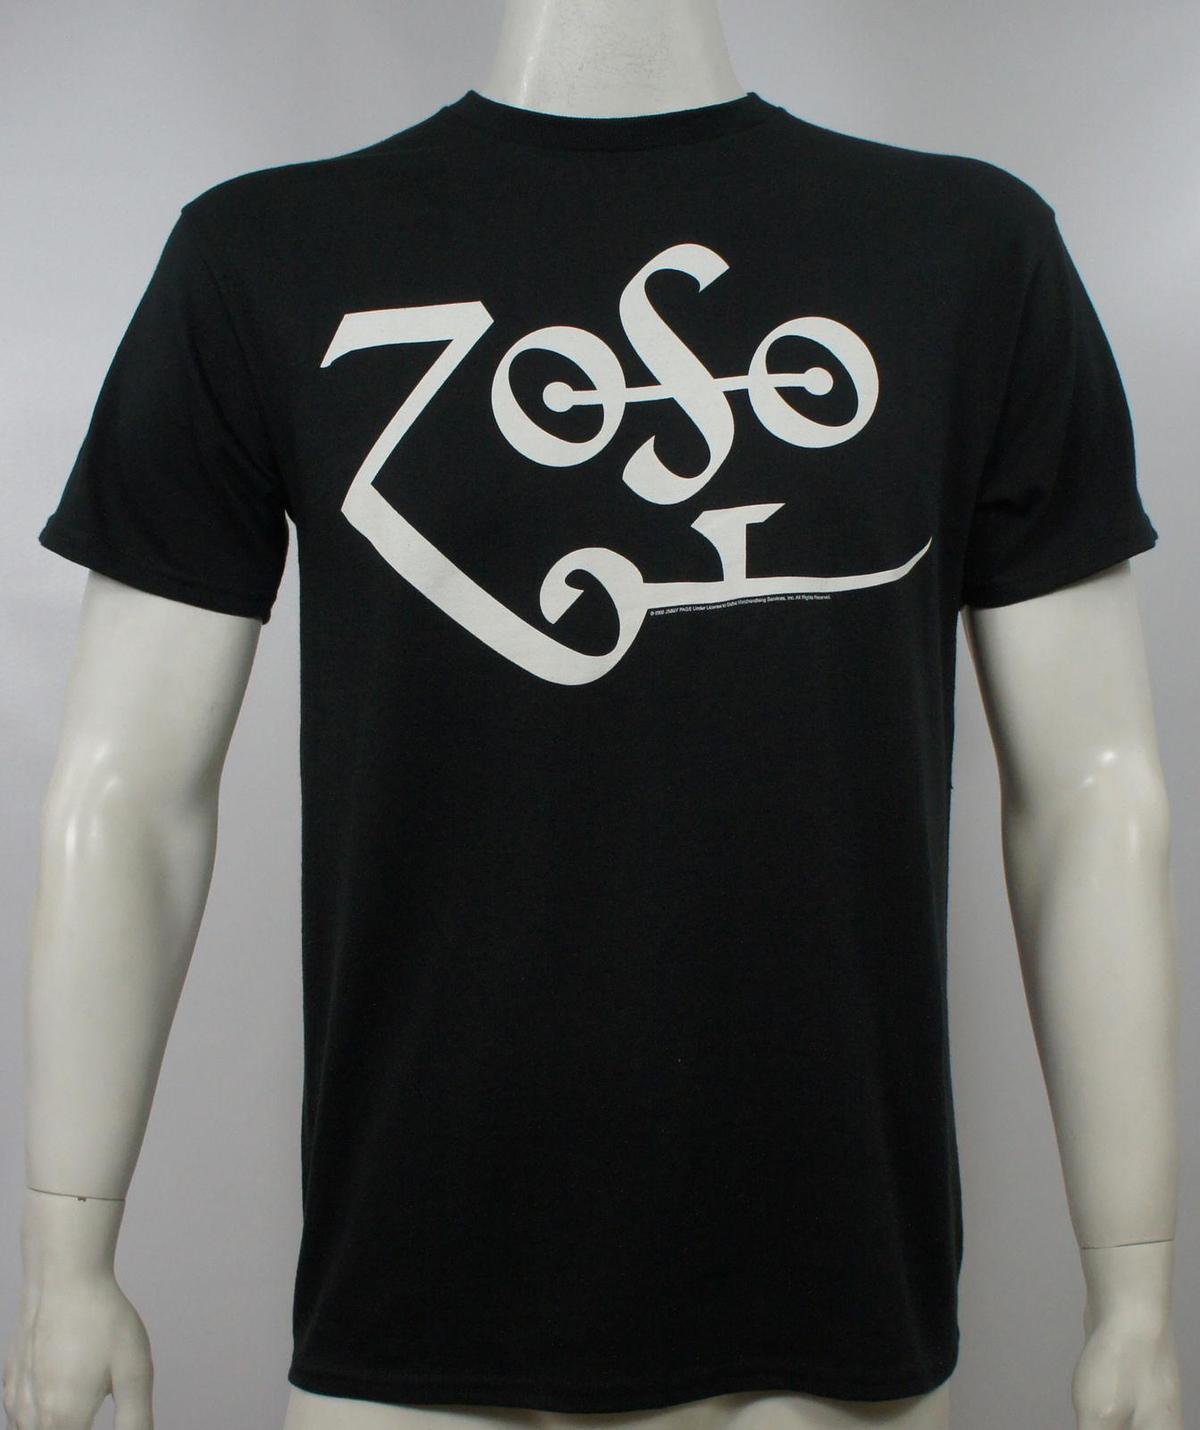 Zoso Logo - Authentic JIMMY PAGE White Zoso Logo Led Zeppelin T Shirt S M L XL 2XL NEW